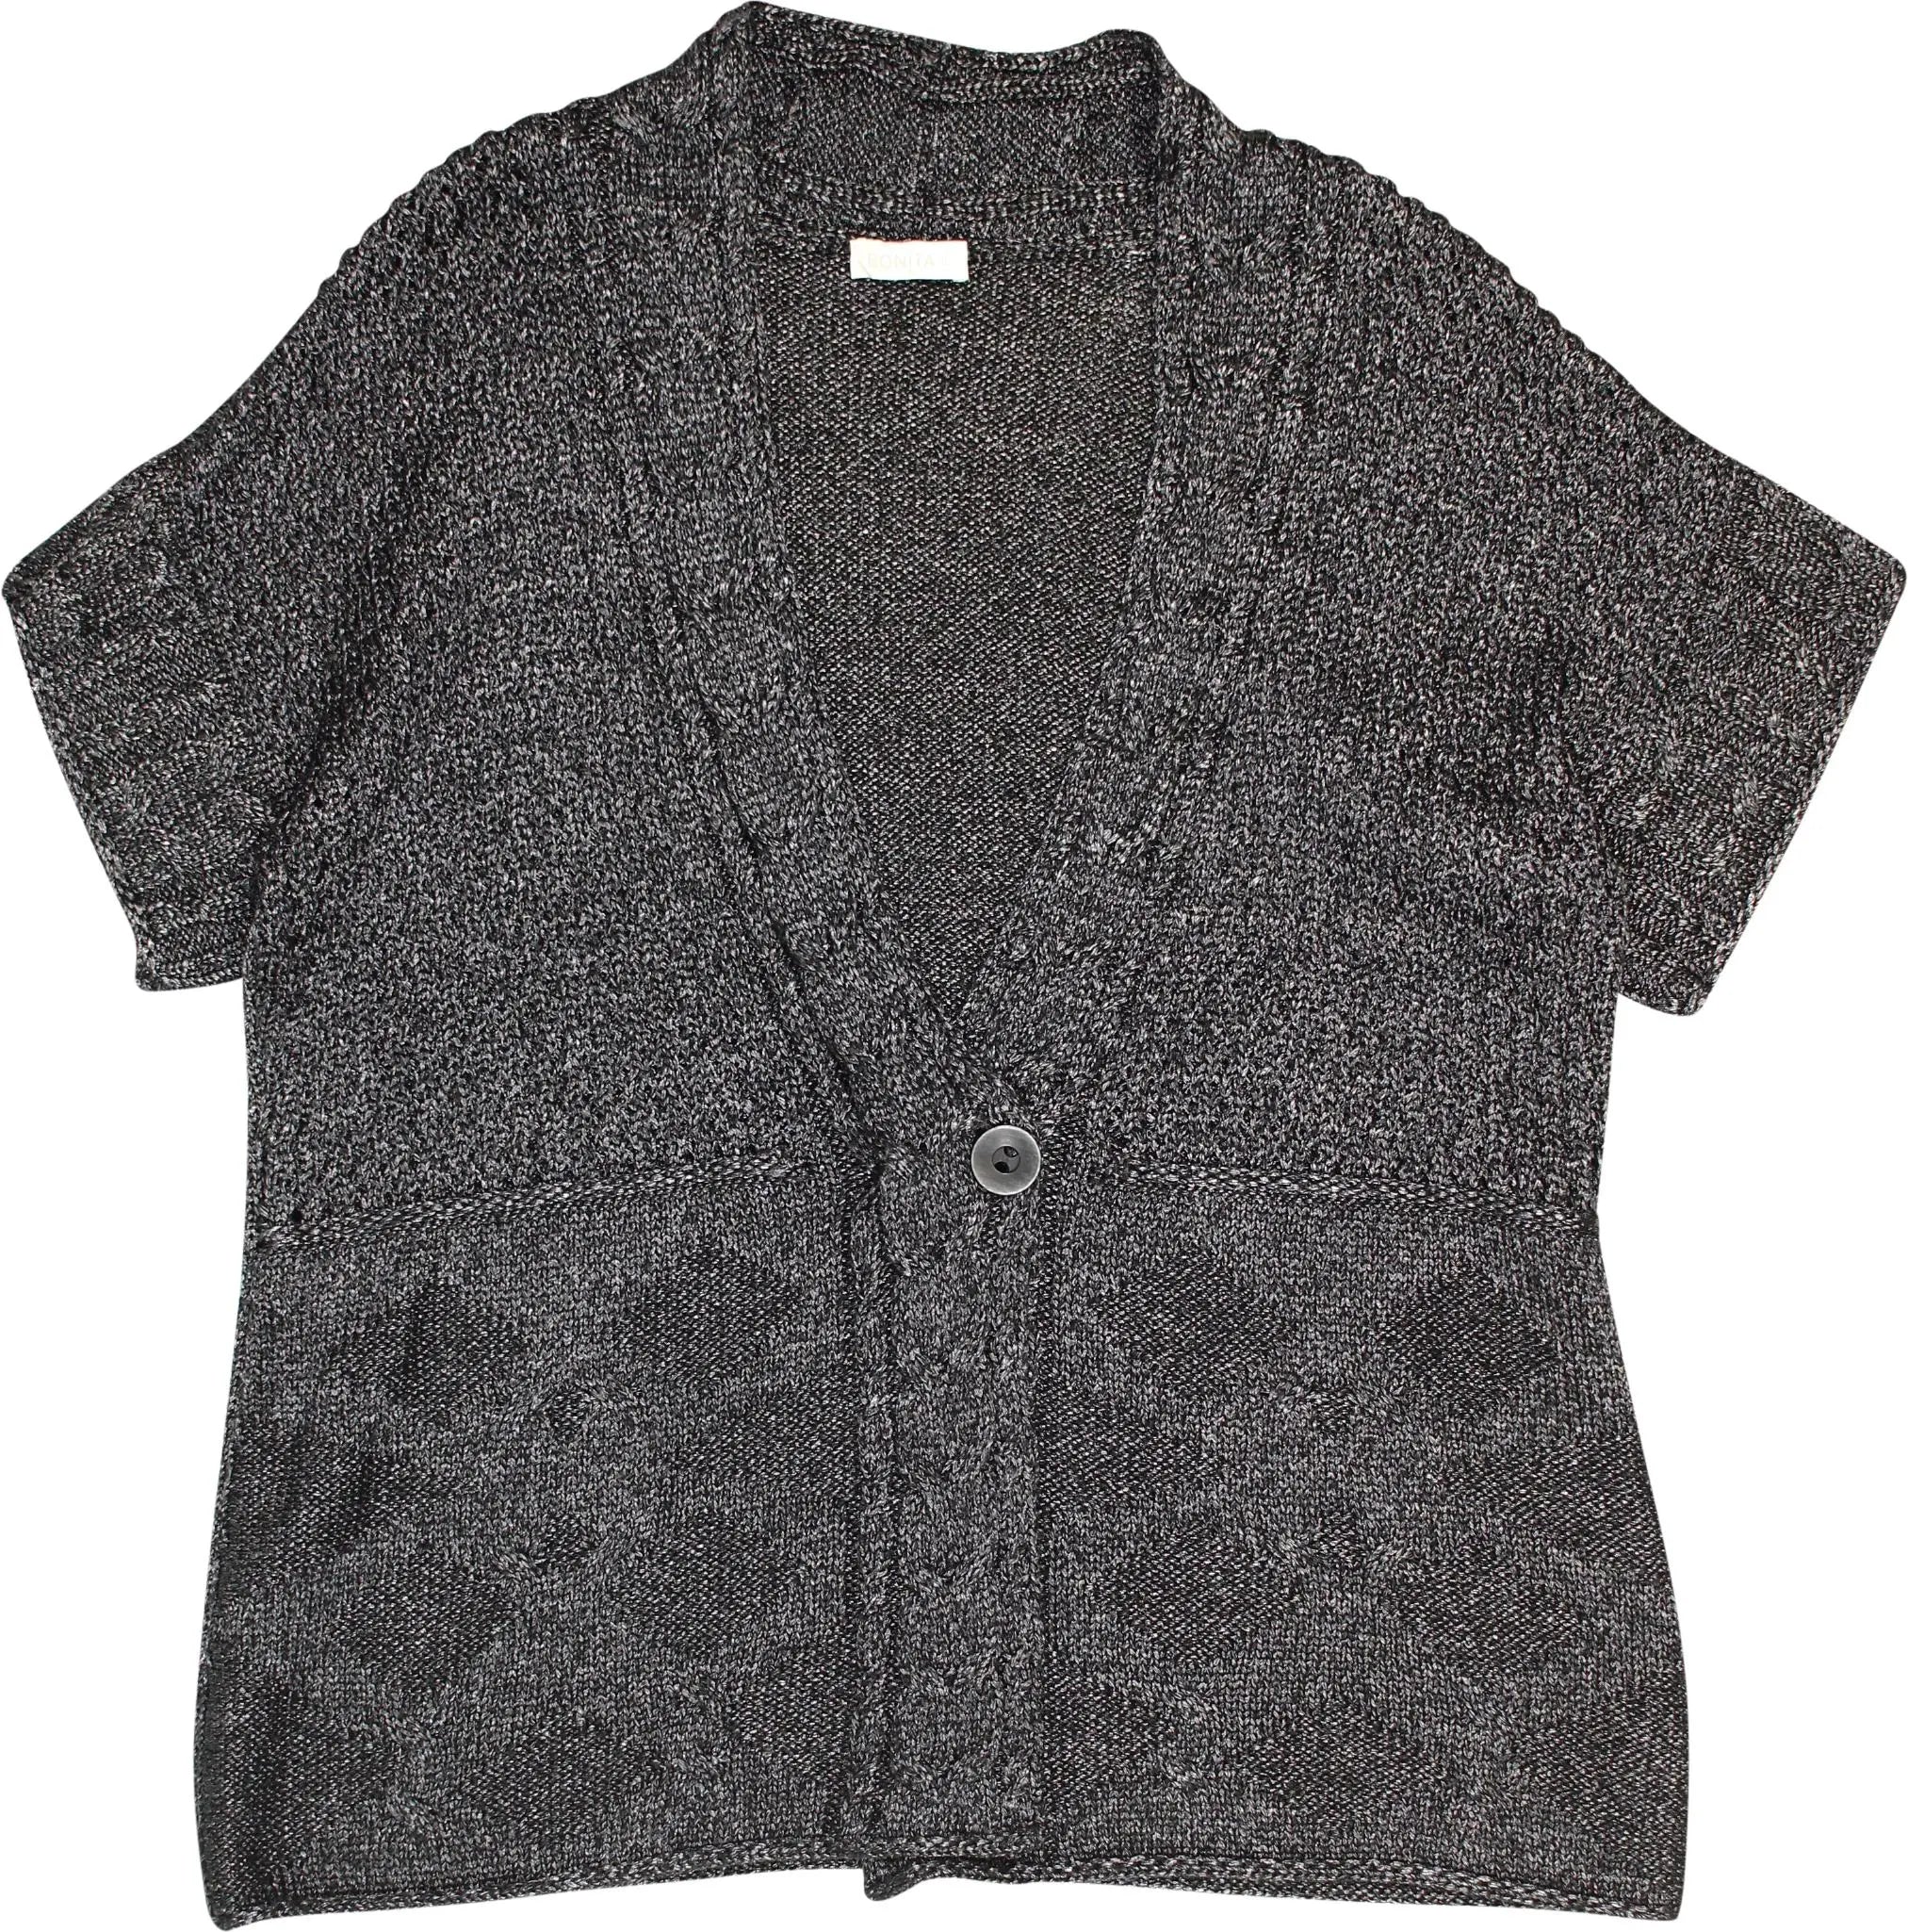 Bonita - Short Sleeve Cardigan- ThriftTale.com - Vintage and second handclothing